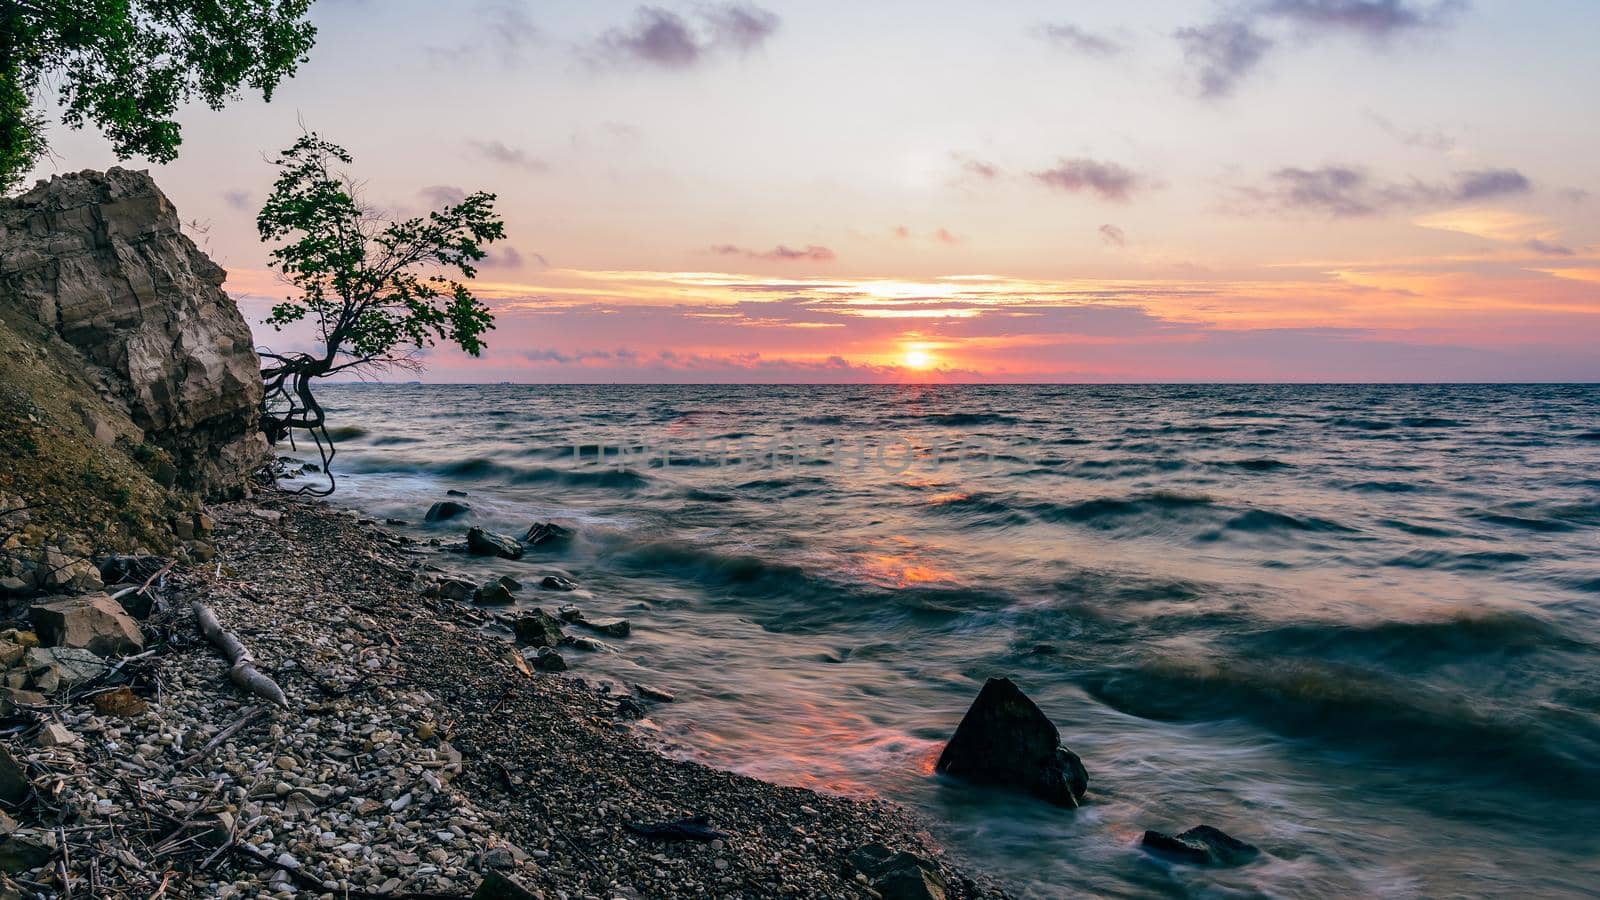 Tree on the rocky shore at sunrise by Seva_blsv